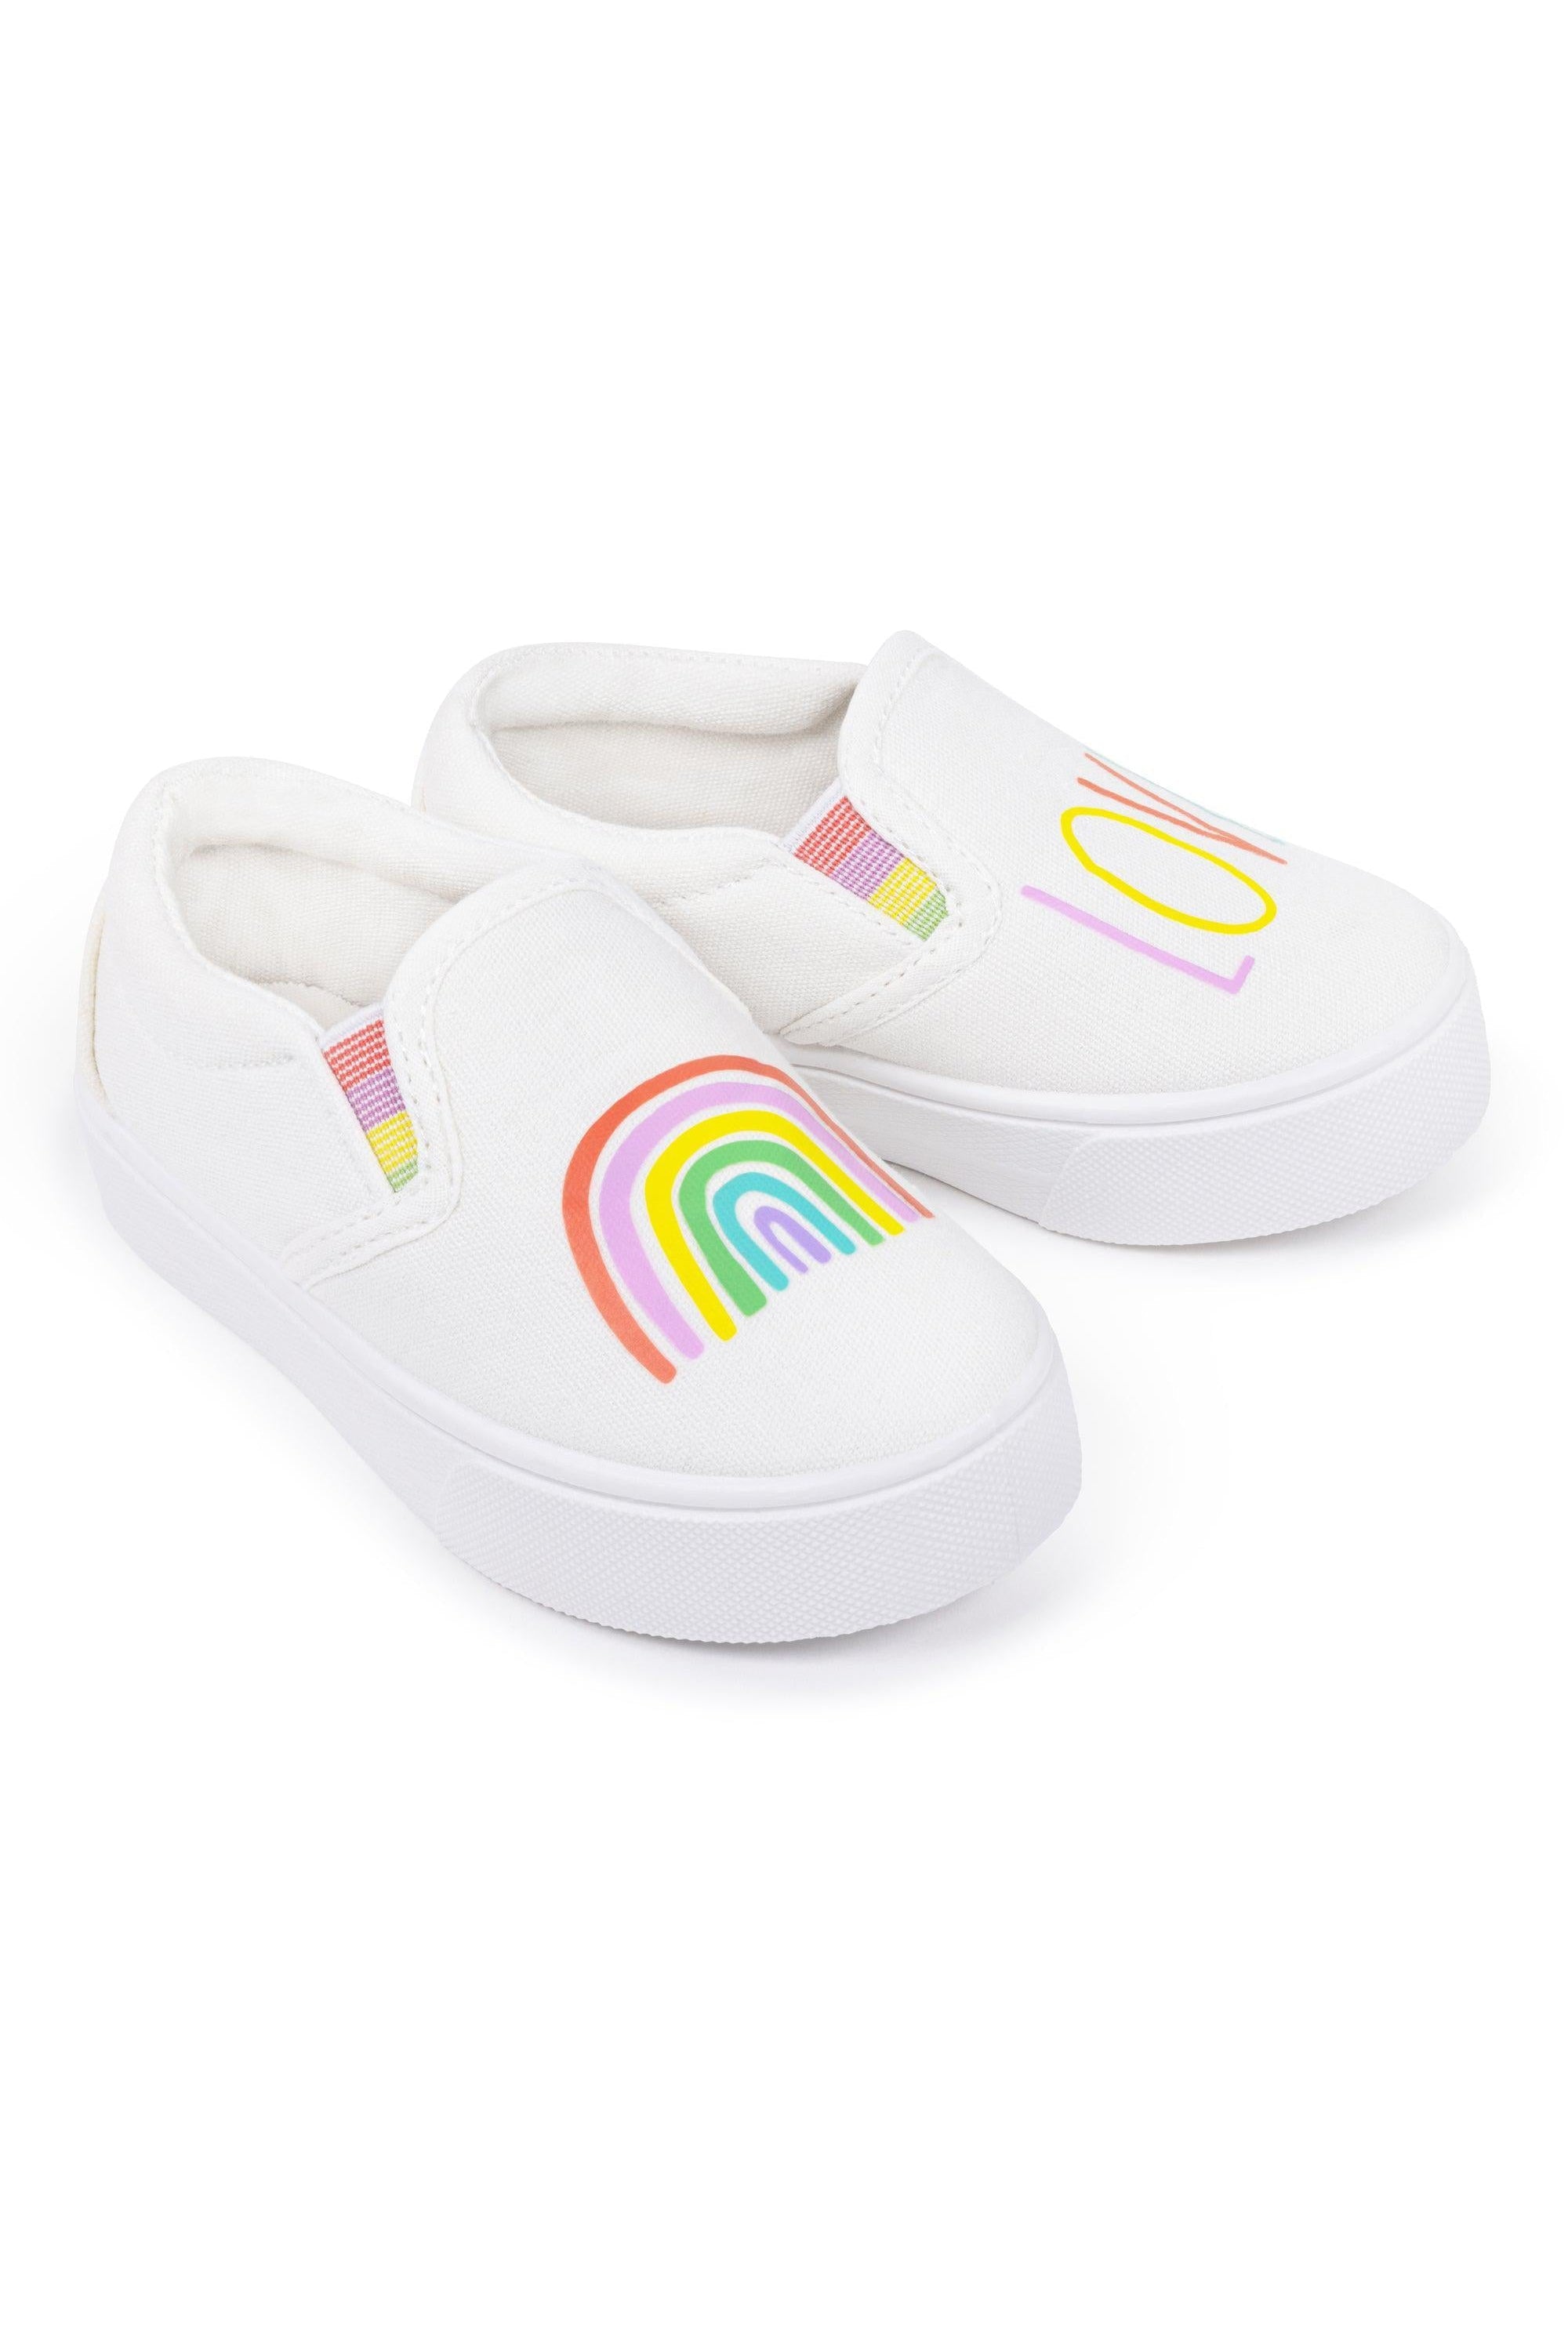 Girl's Rainbow LOVE Slip On Sneakers - Rae Dunn Wear